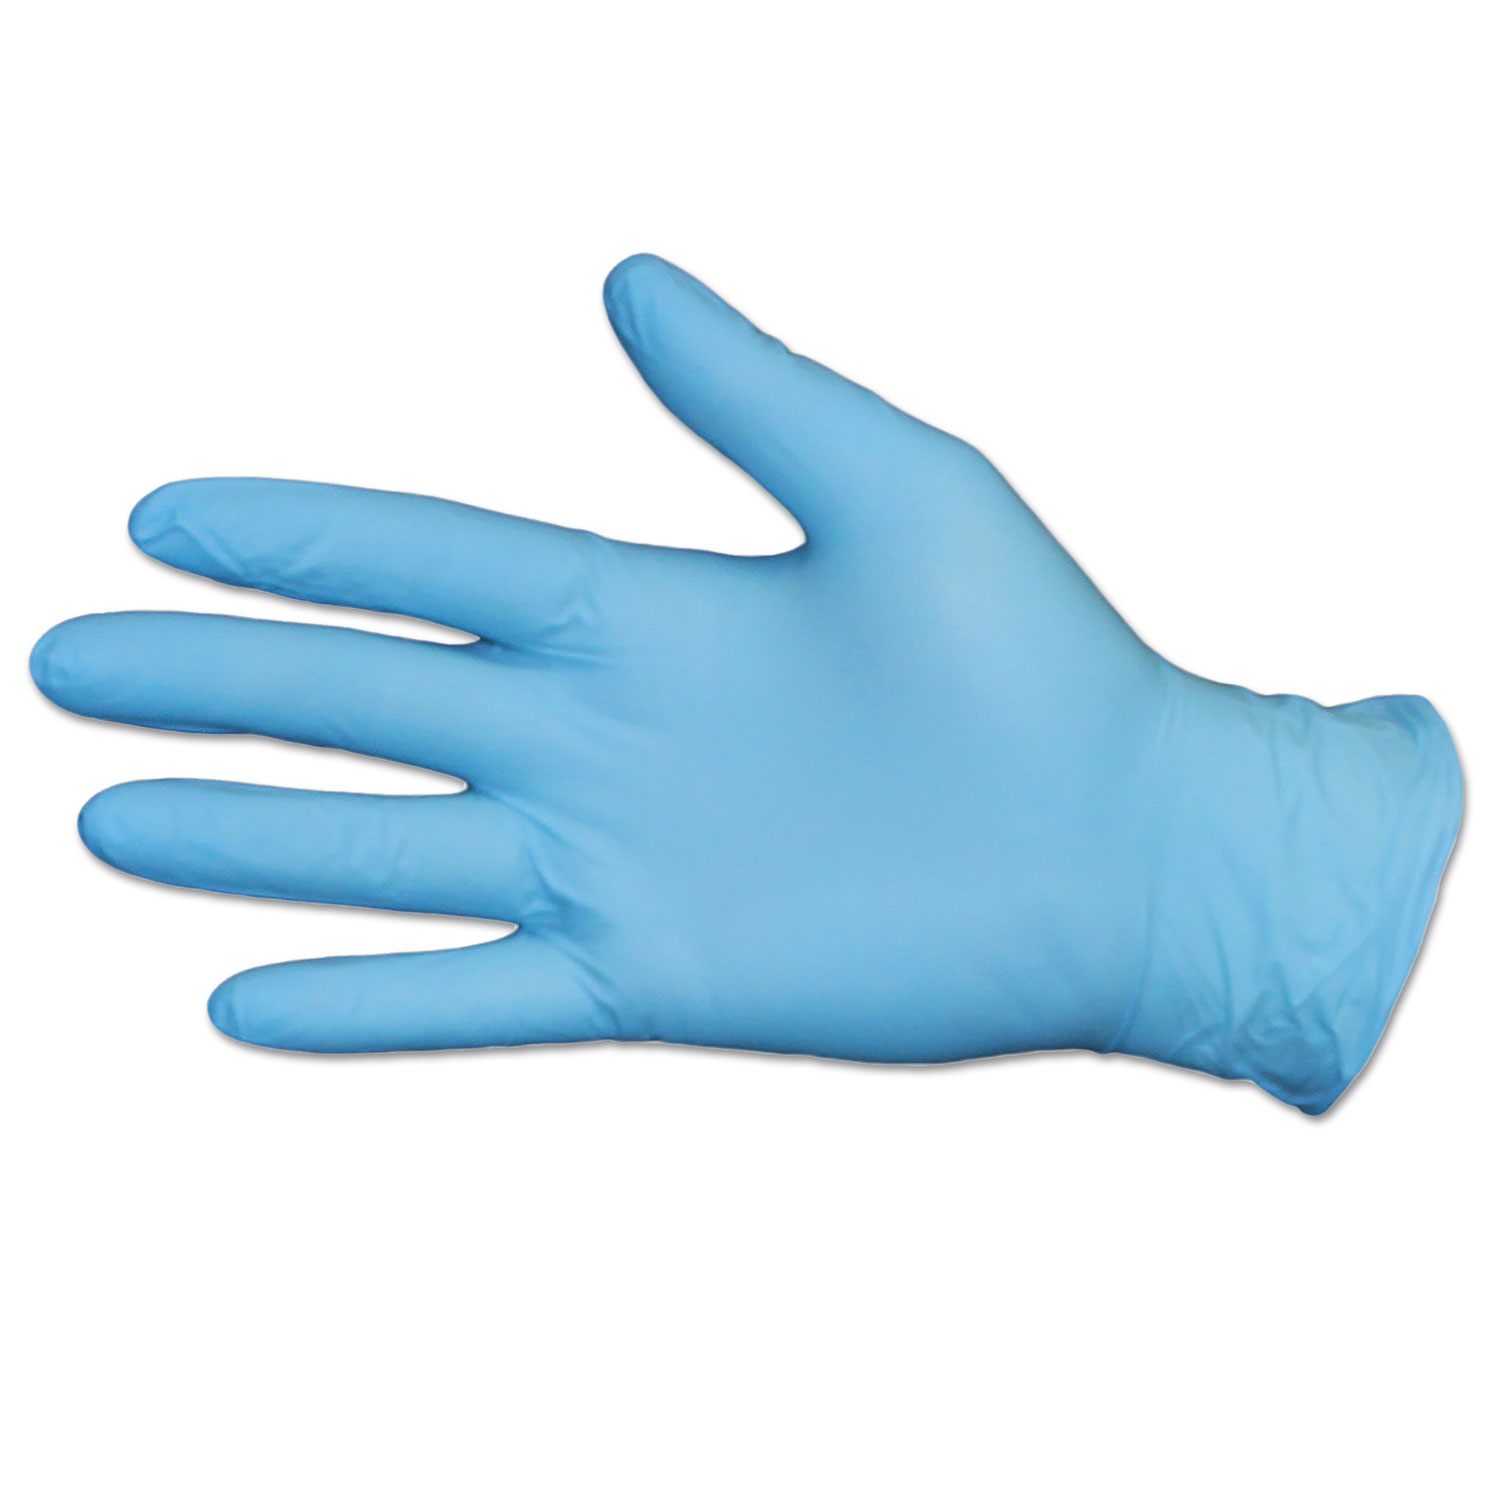 Pro-Guard Disposable Powder-Free General-Purpose Nitrile Gloves, Blue, Medium, 100/Box, 10 Boxes/Carton